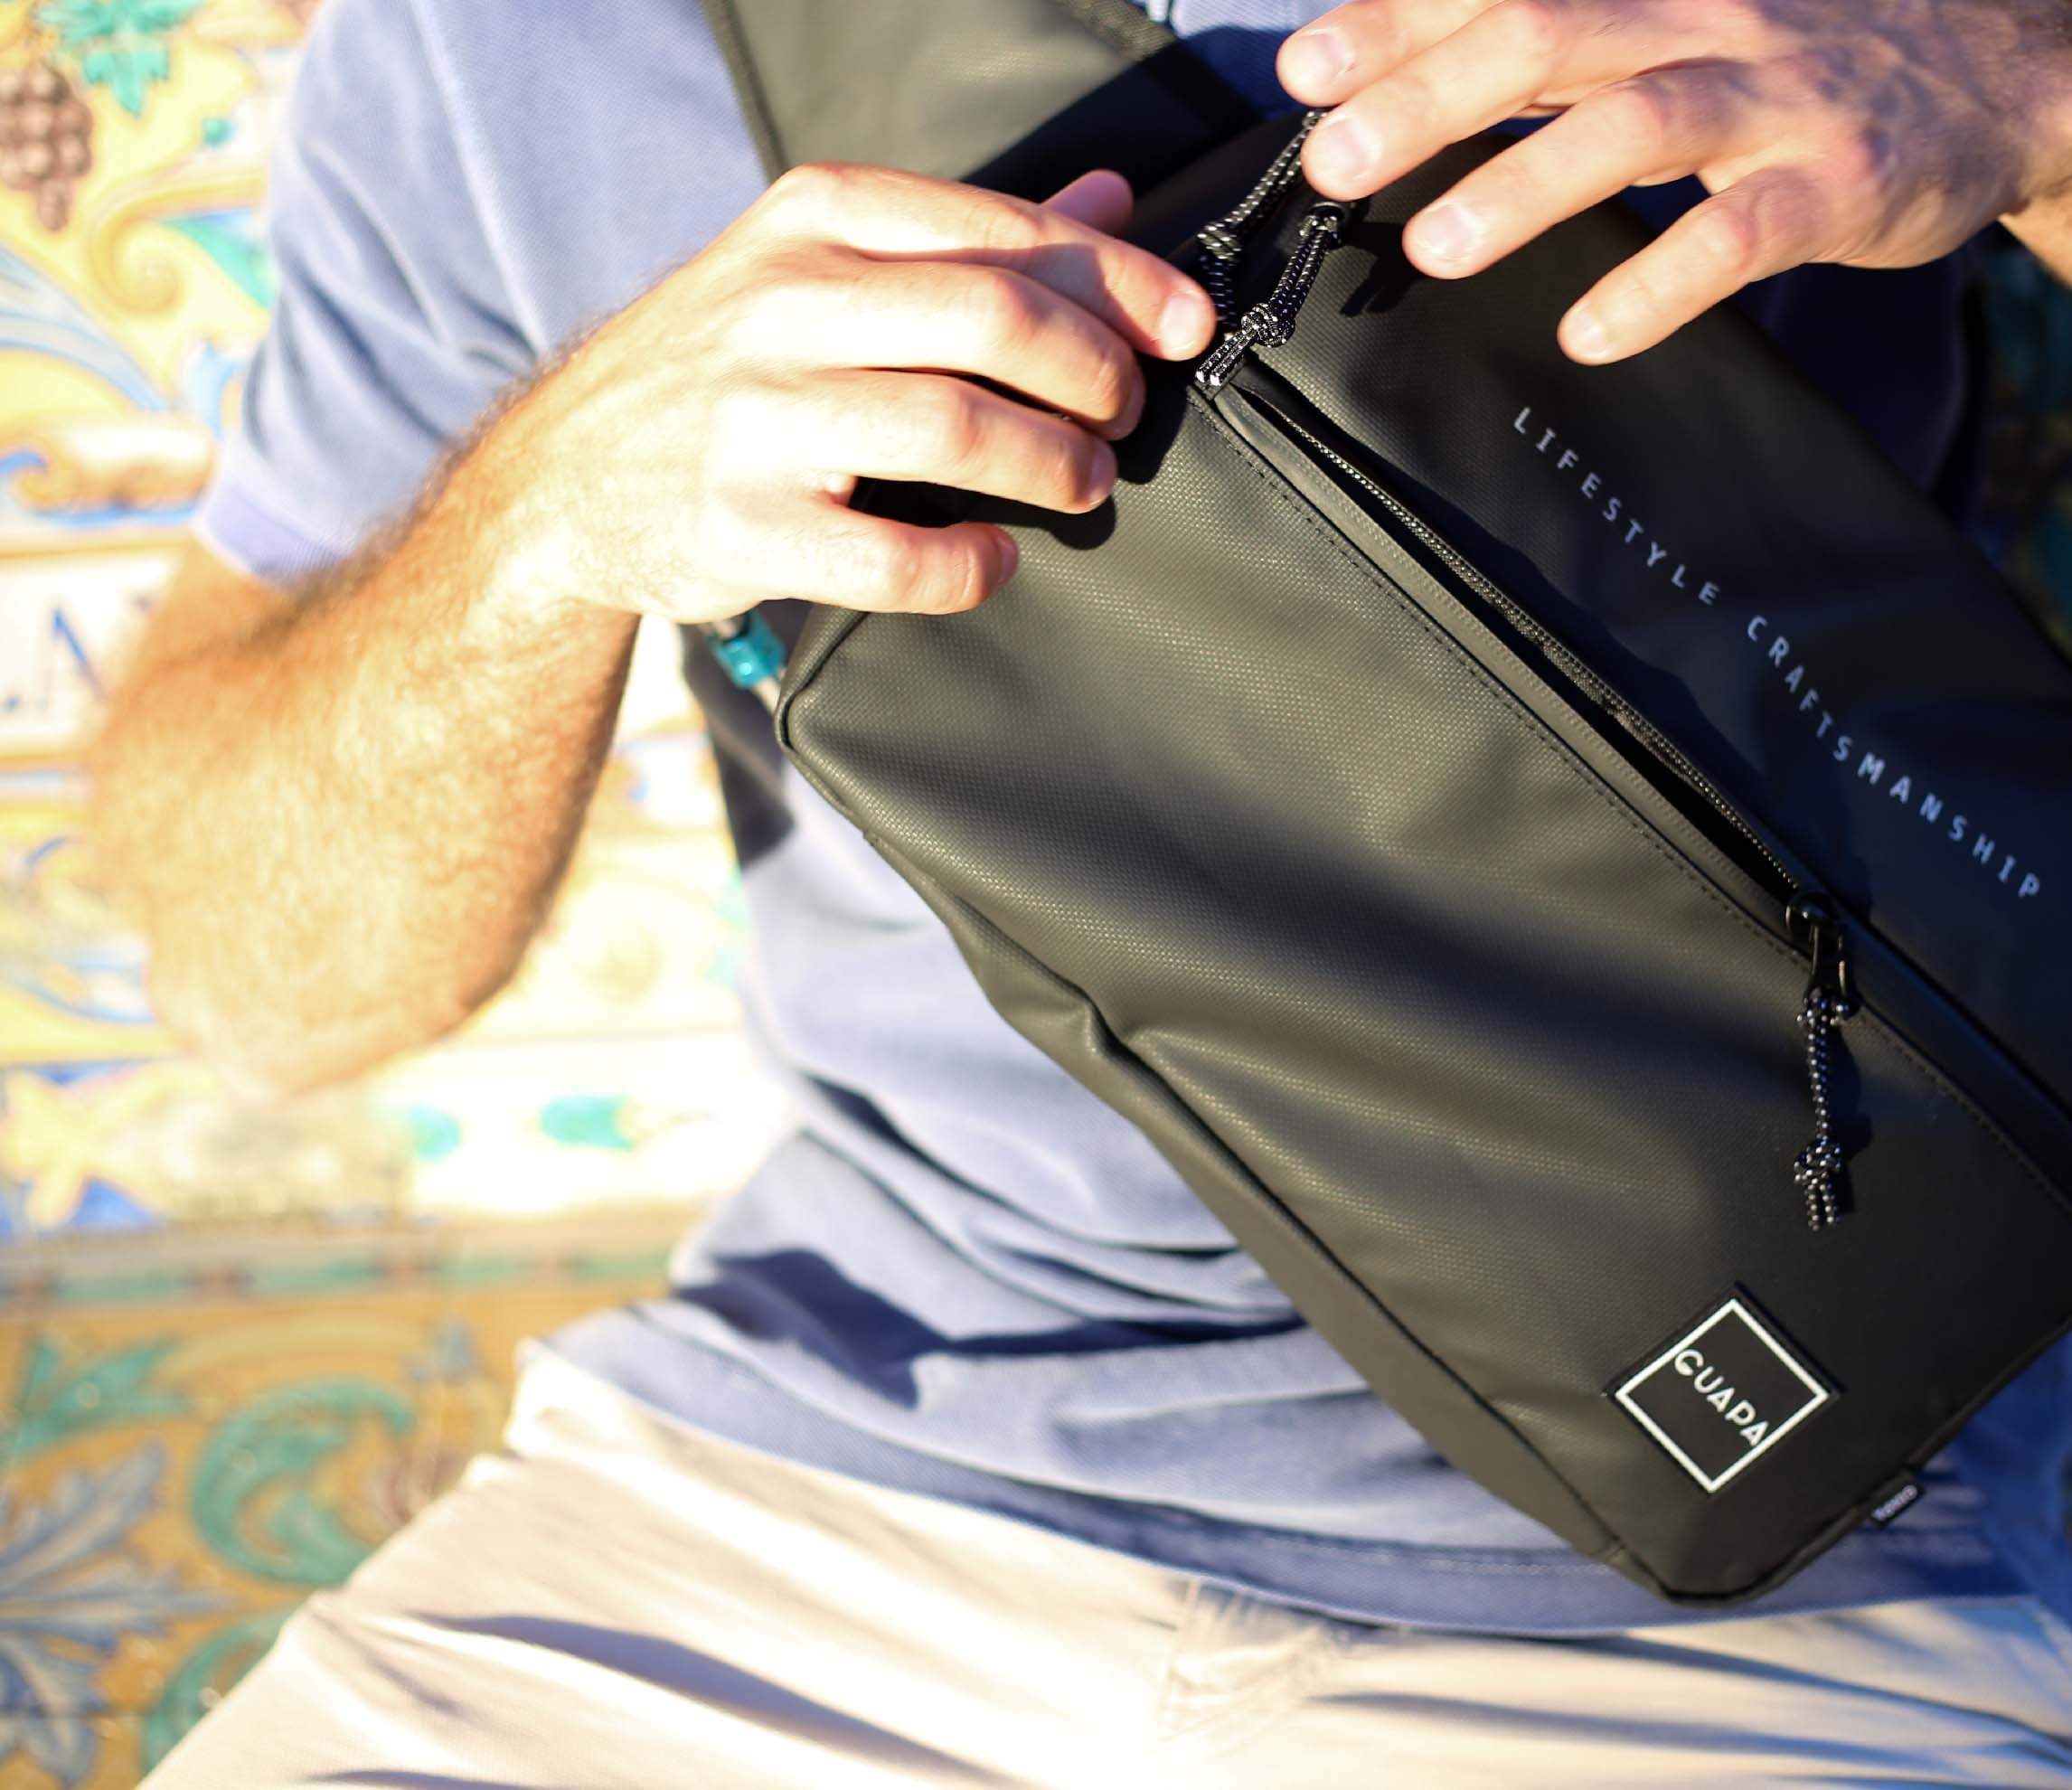 Water-Resistant Large Black Cross Body Bag